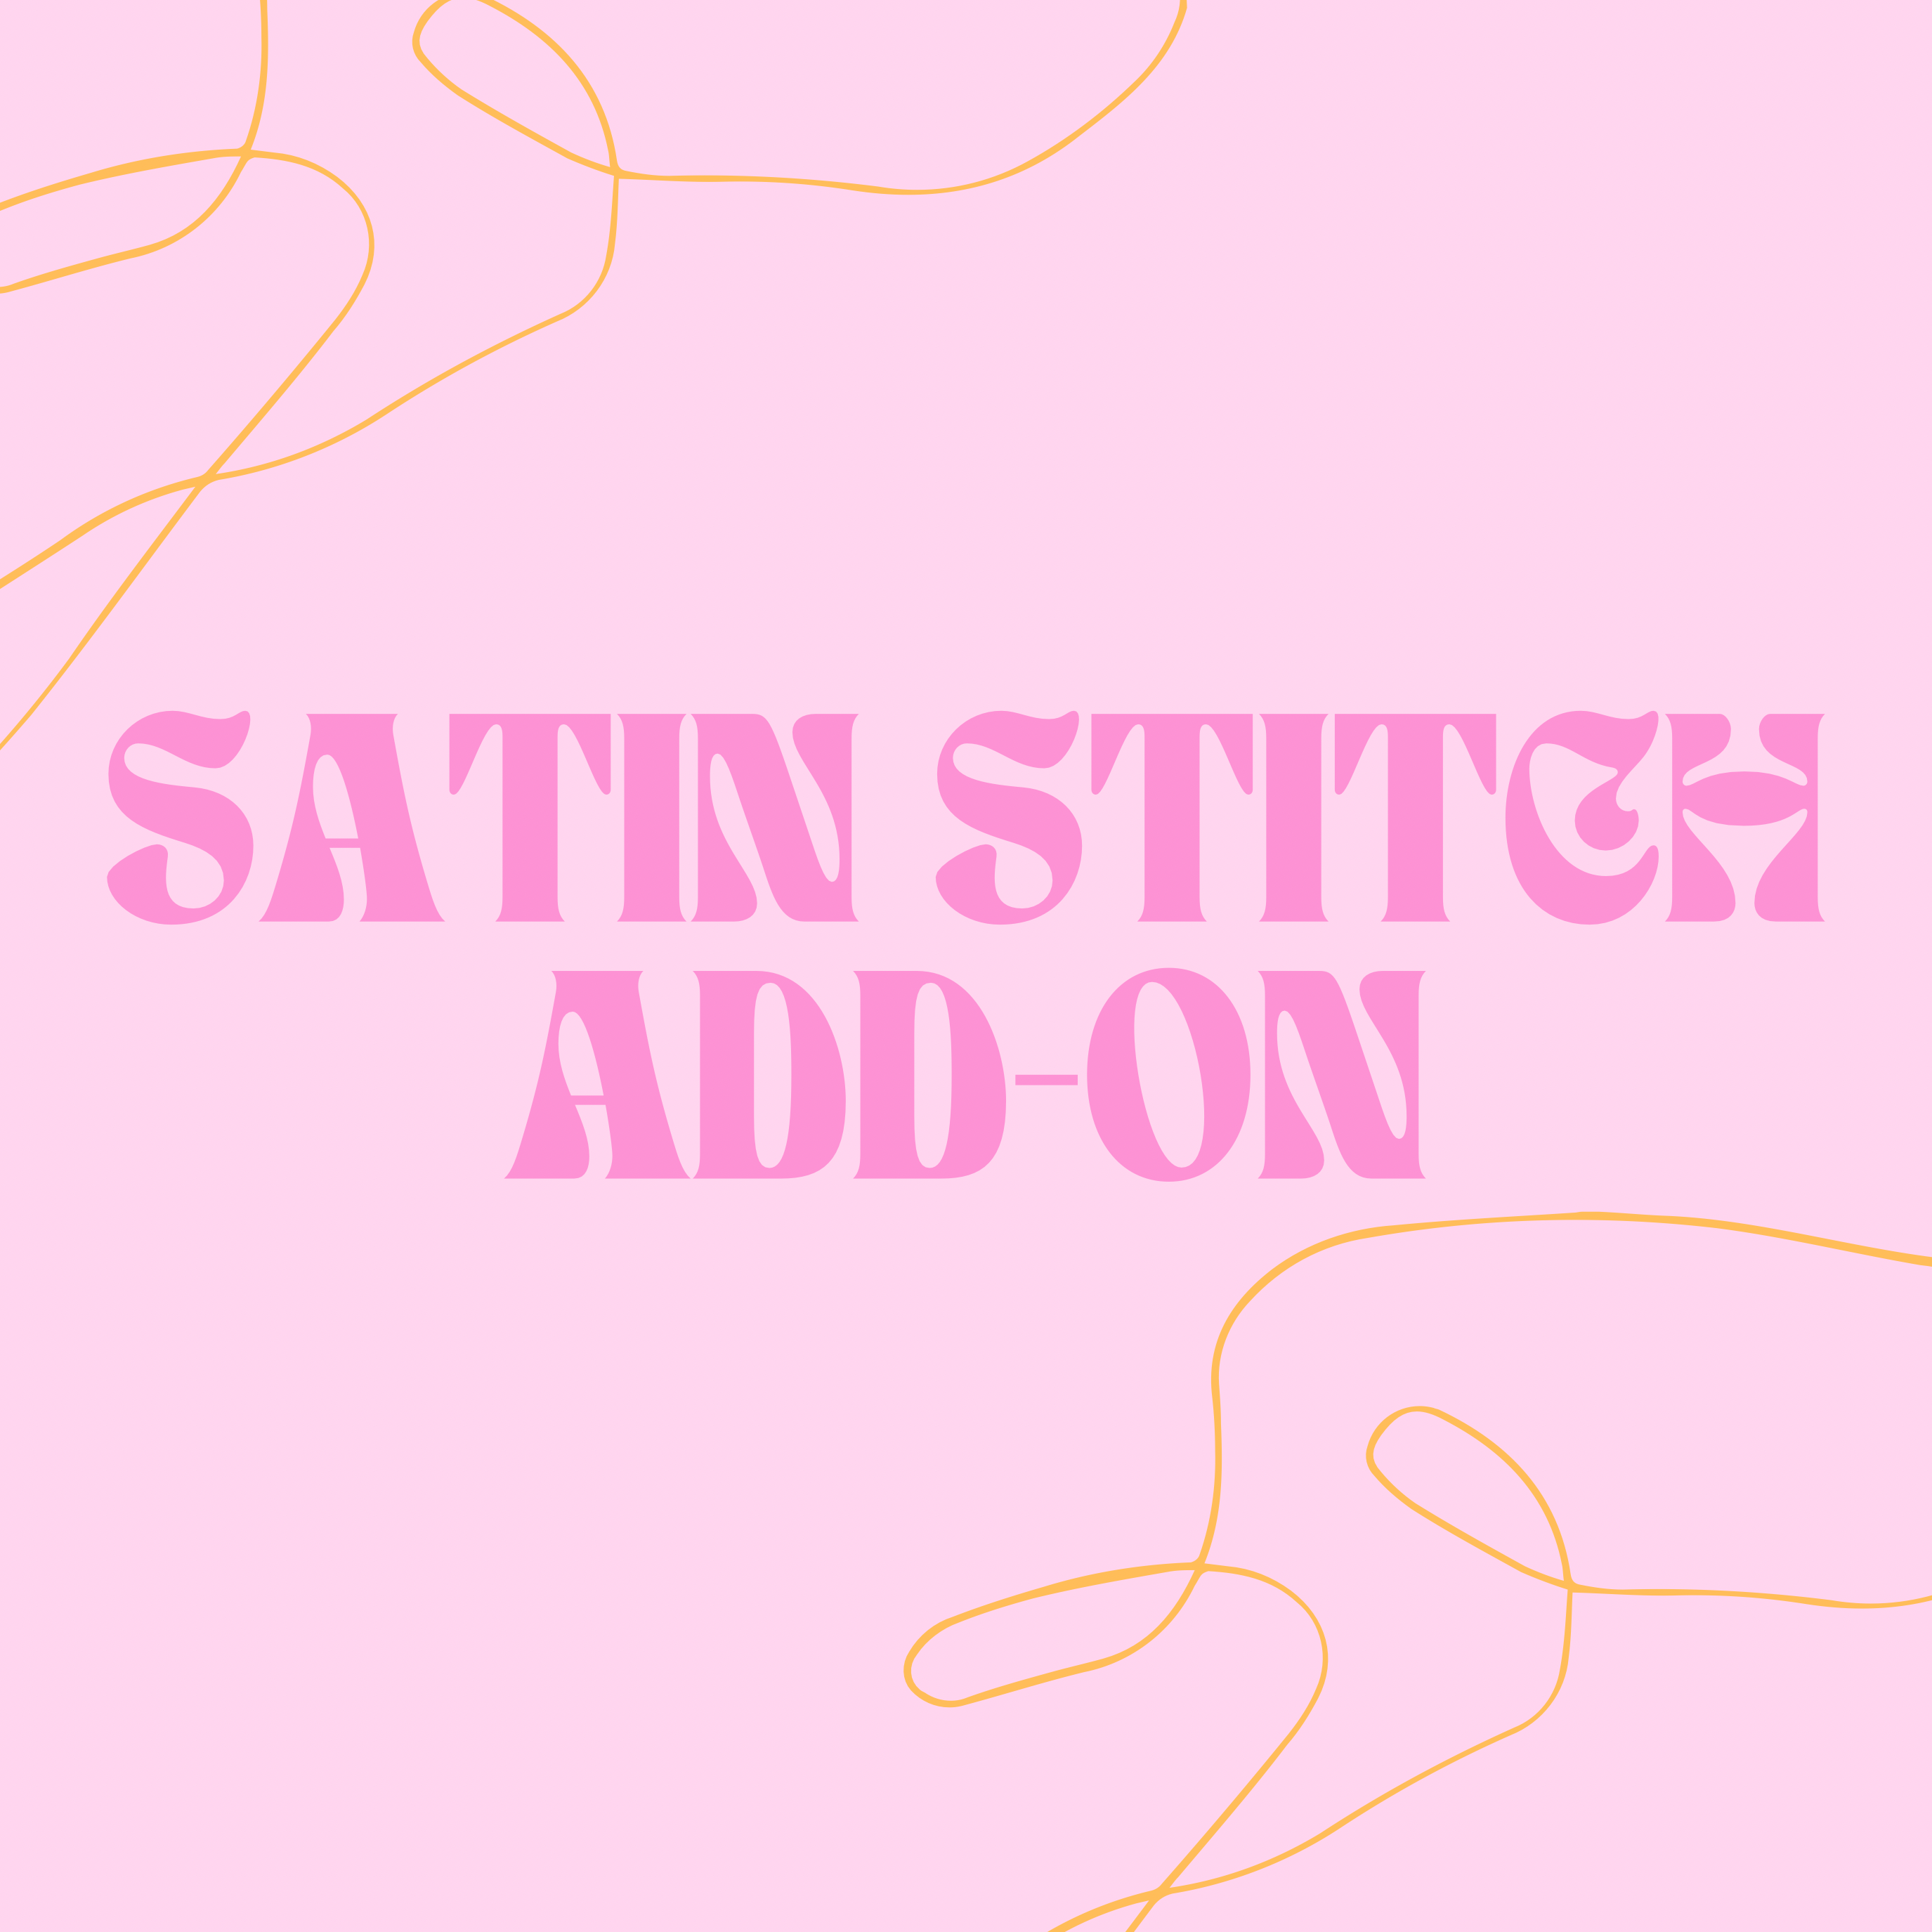 Satin Stitch Add-On